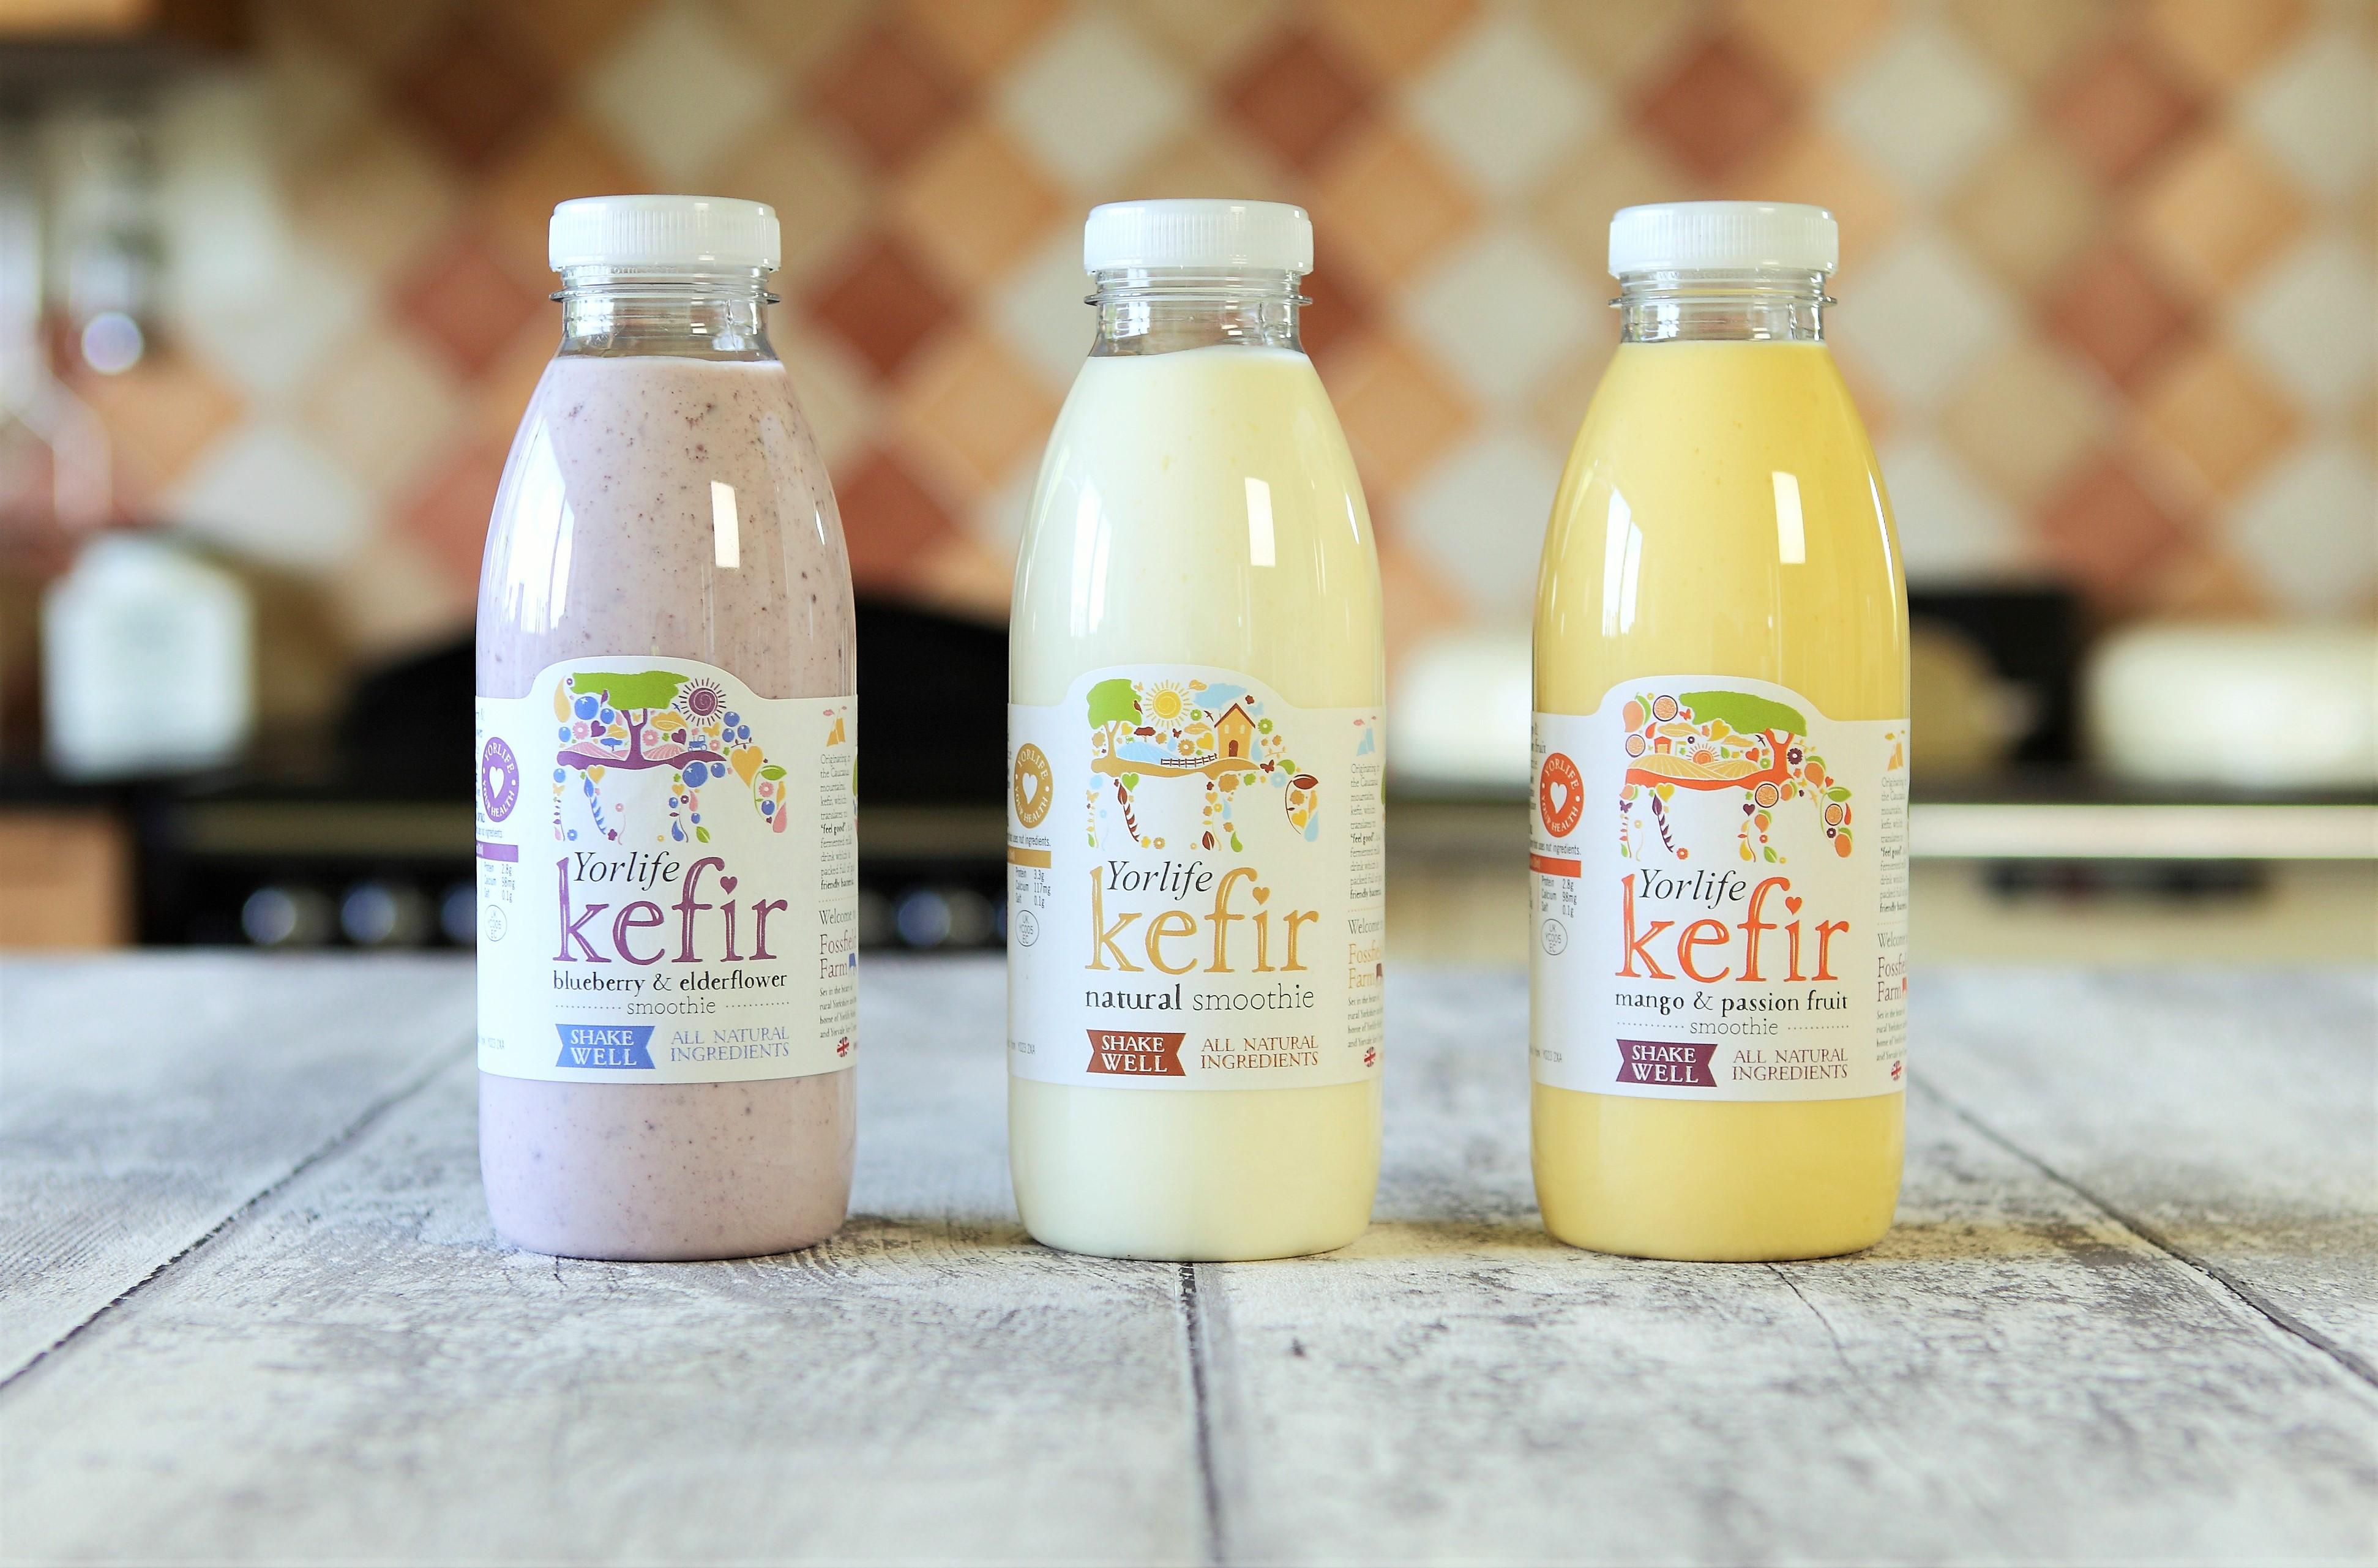 Yorlife Kefir yoghurt drink - Desang Diabetes Services